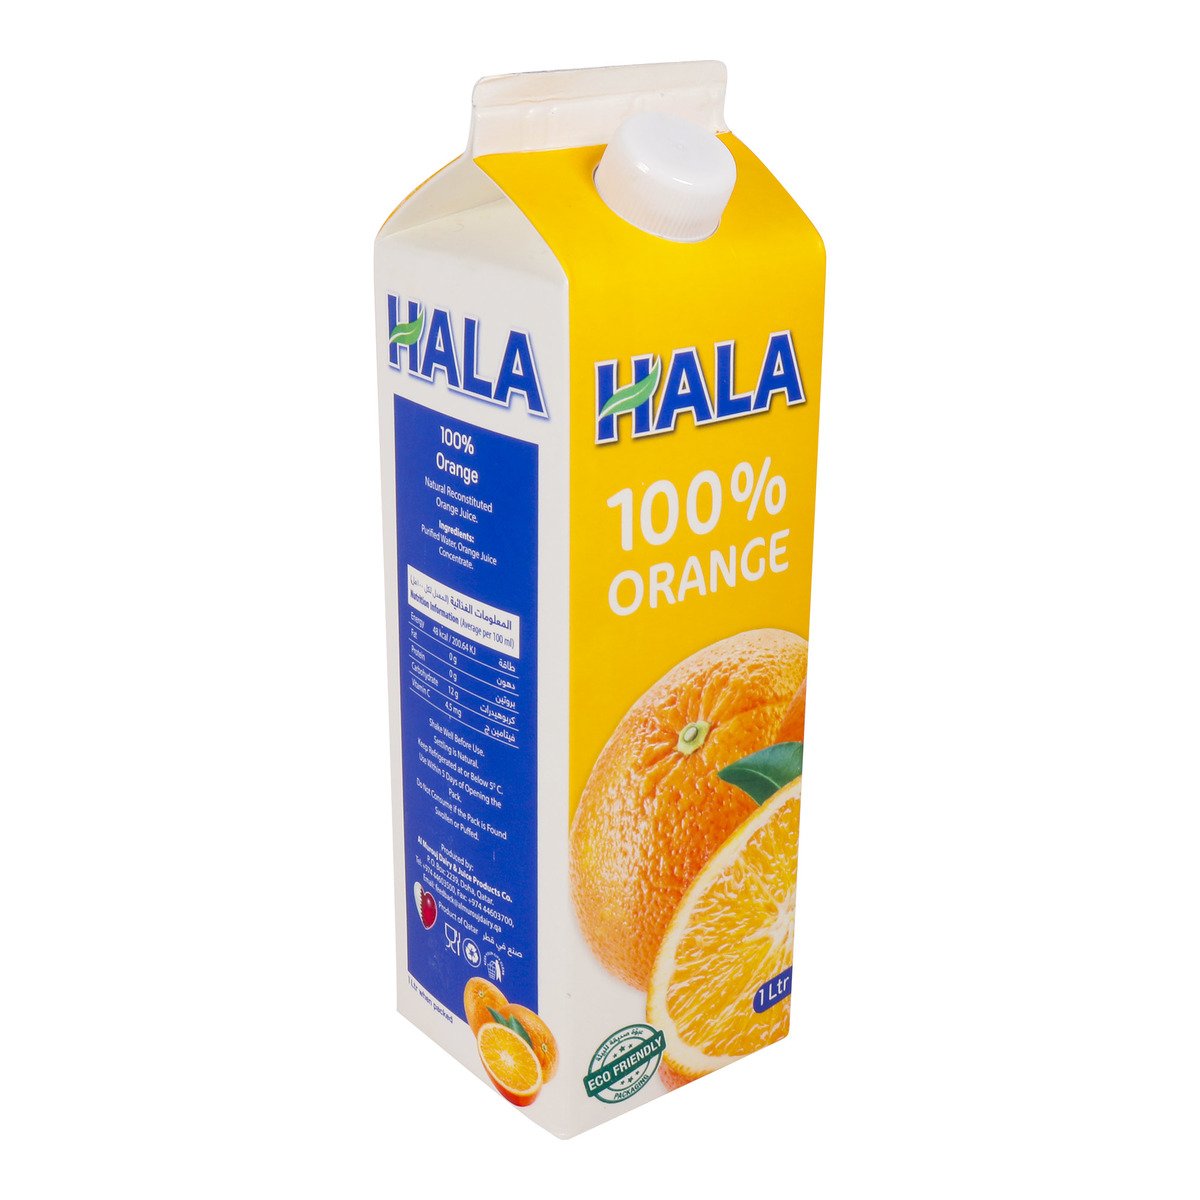 Hala Orange Juice 1Litre